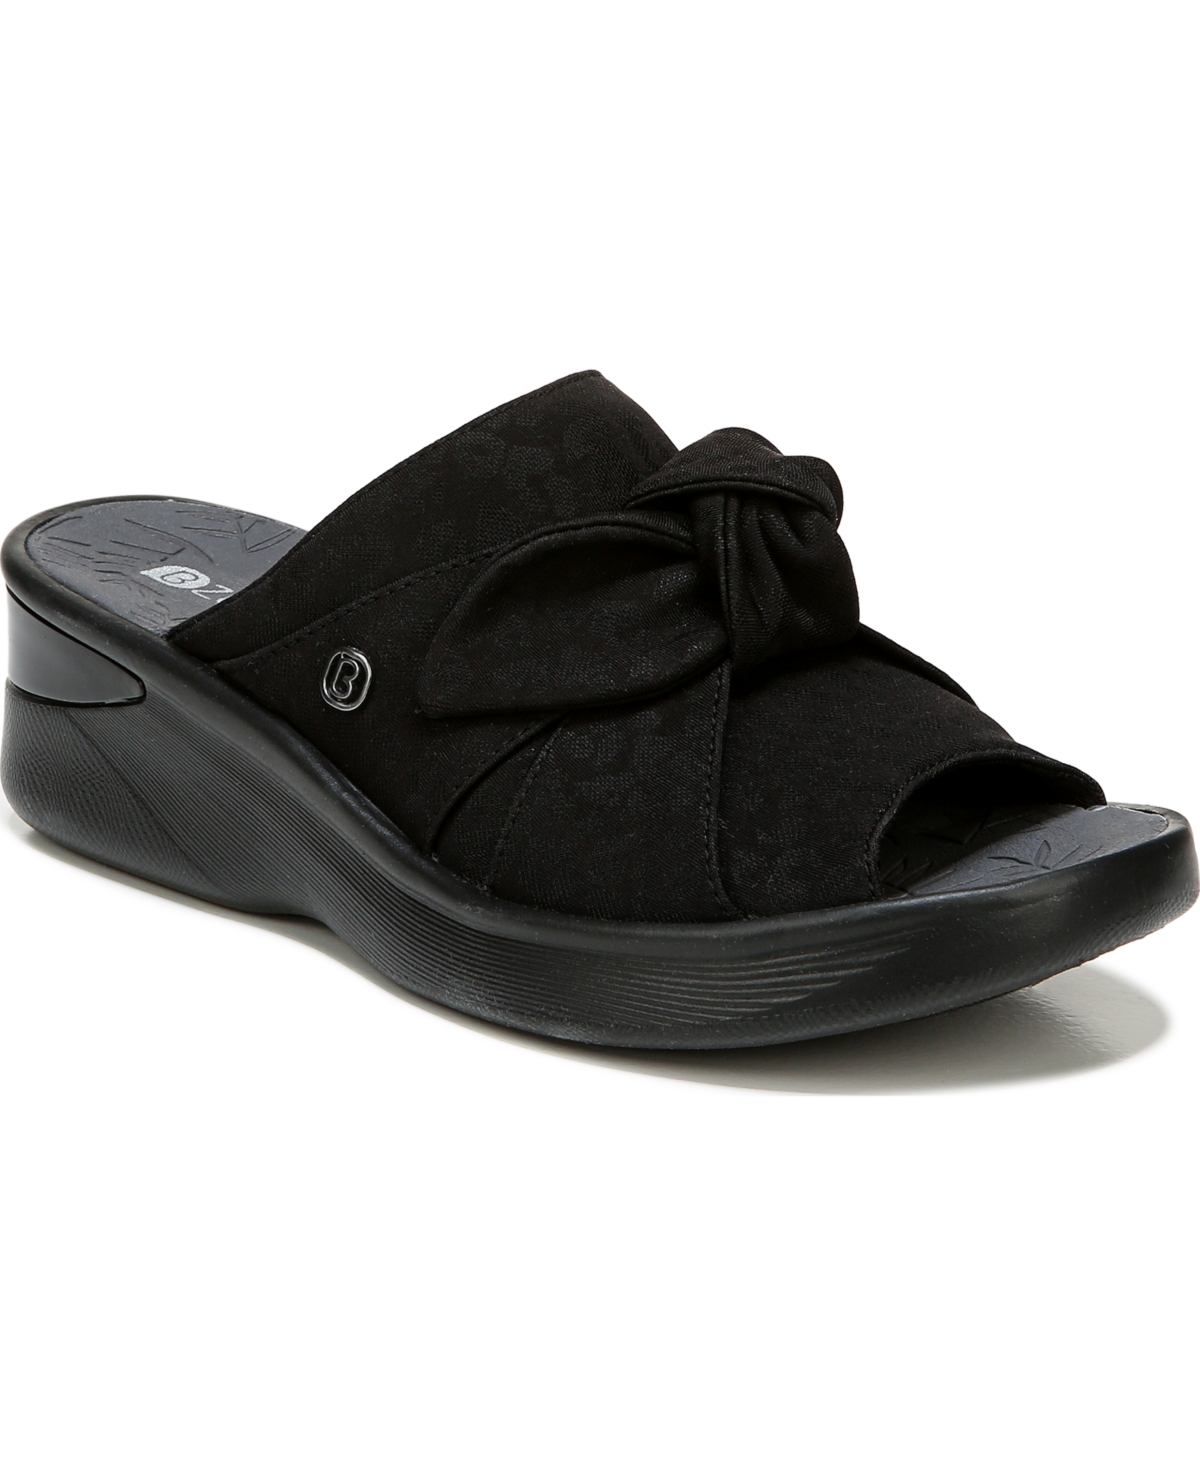 Bzees Smile Washable Slide Wedge Sandals Women's Shoes